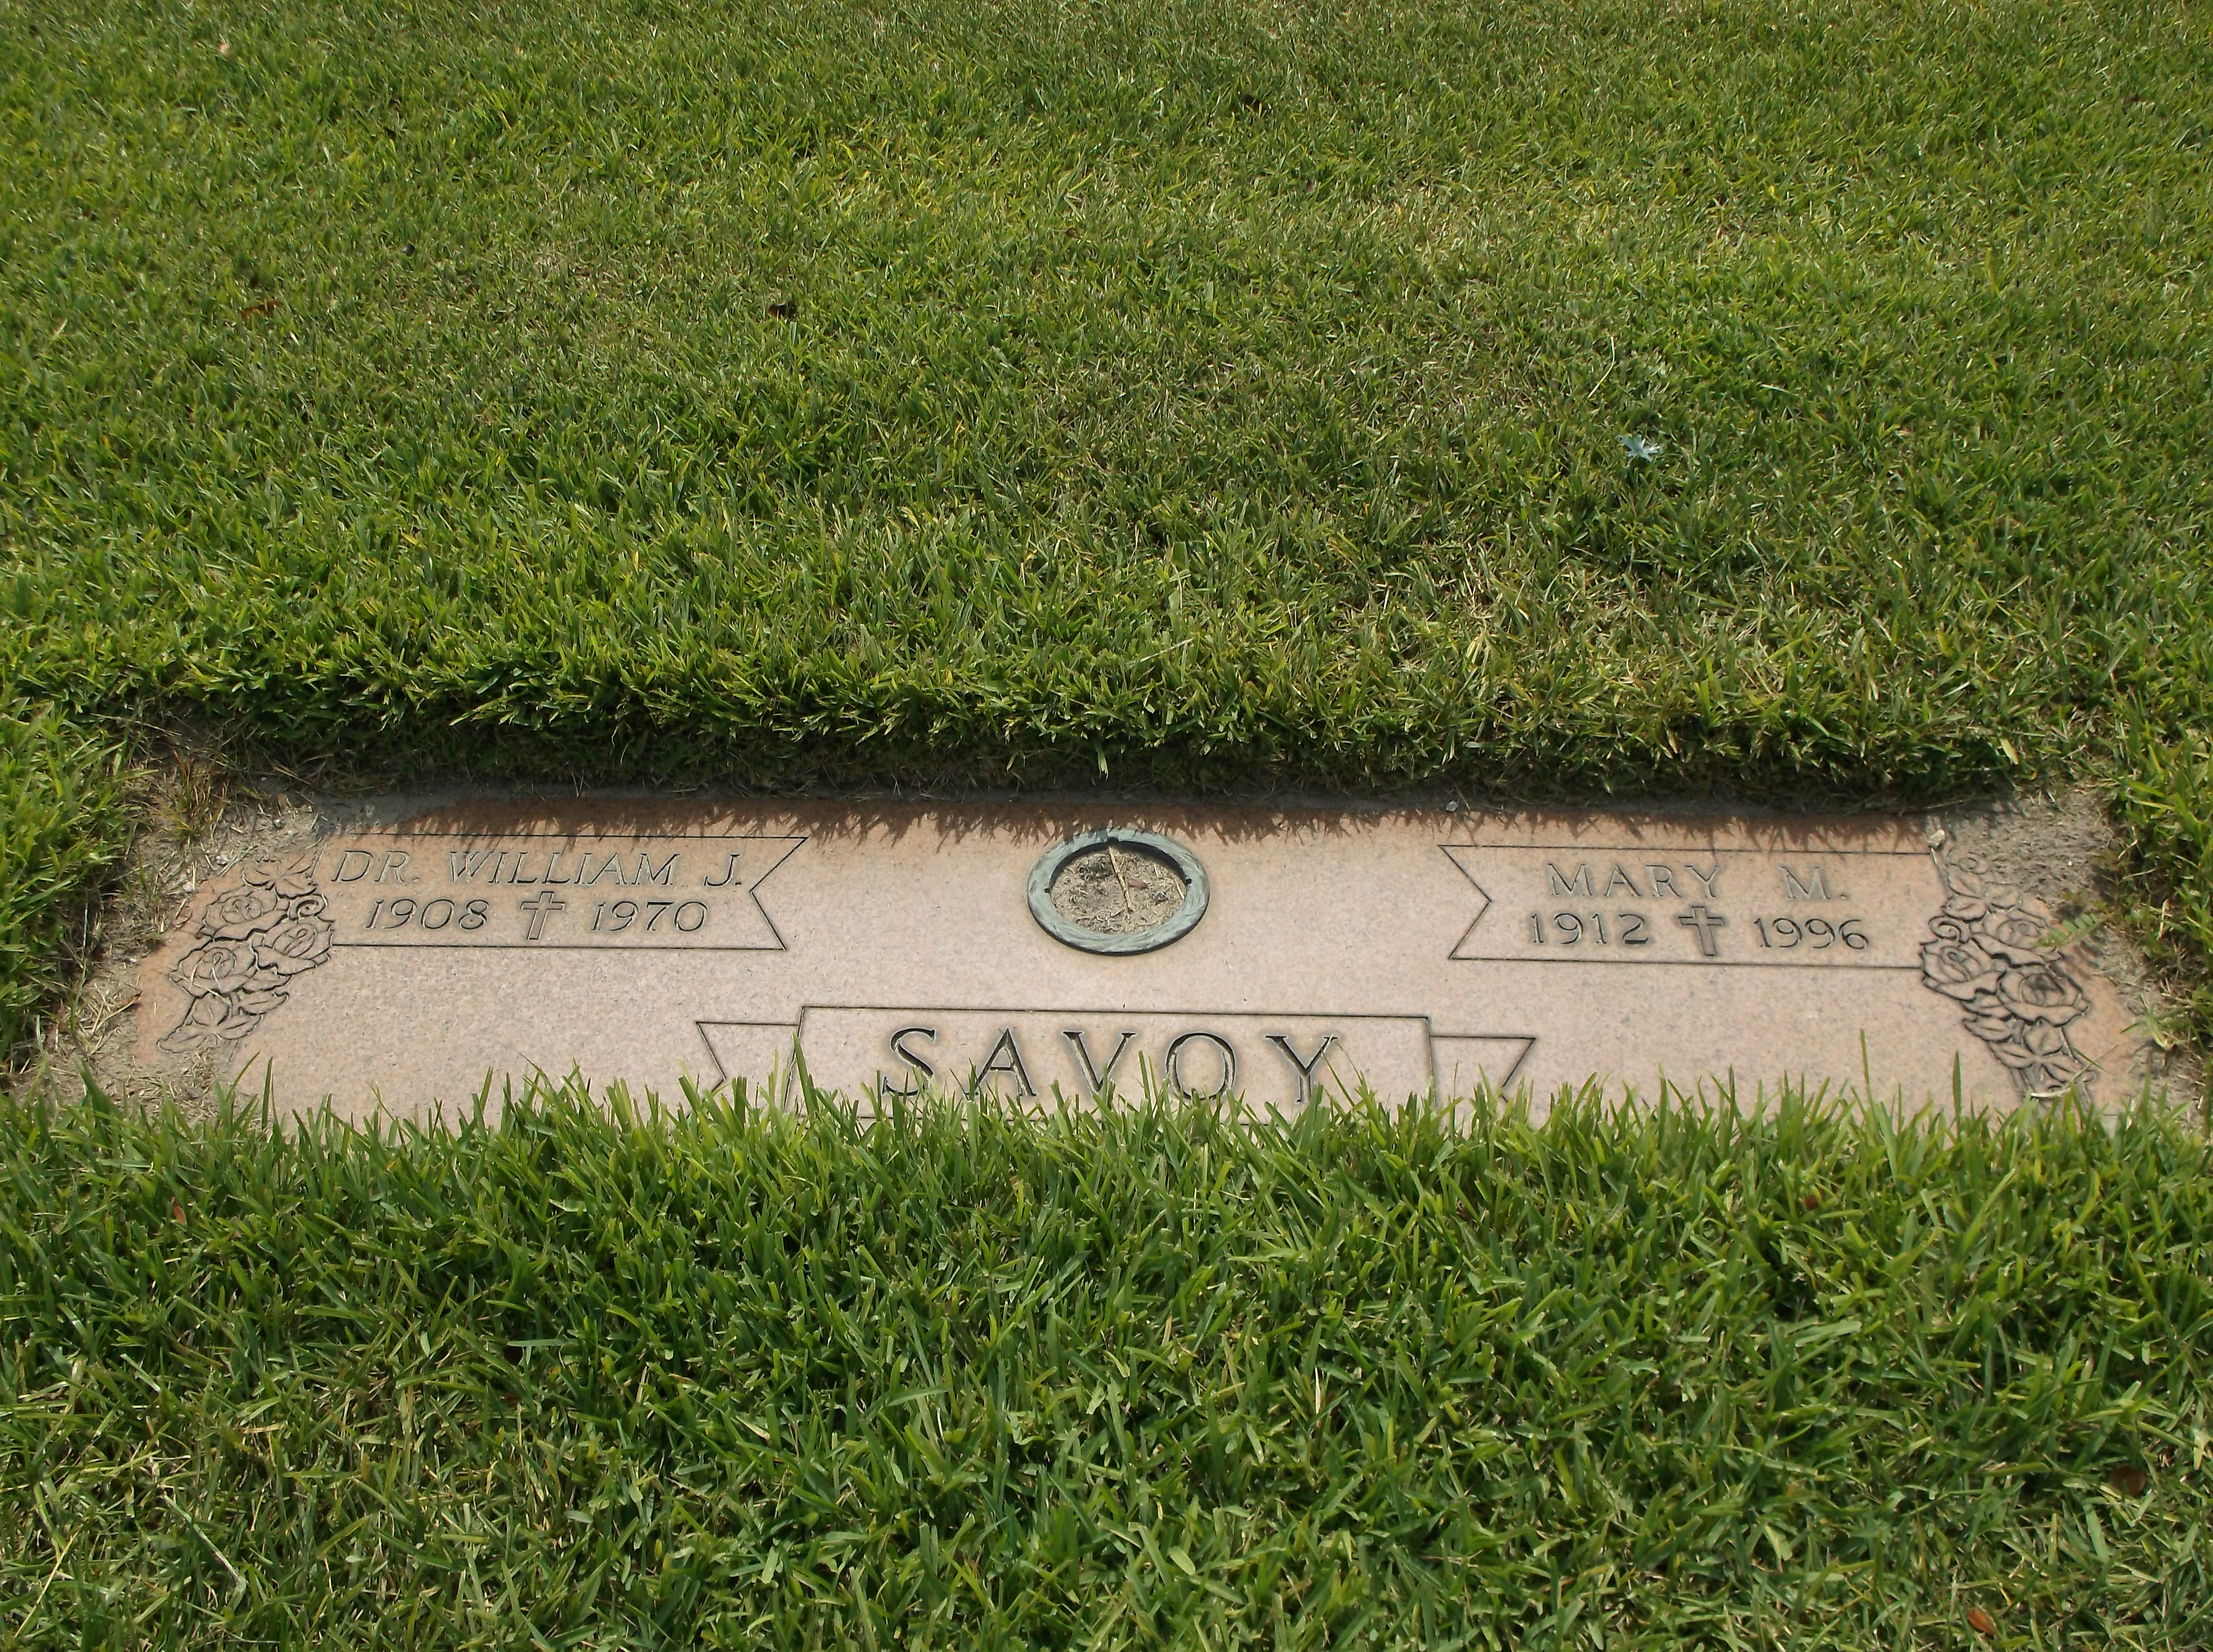 Mary M Savoy